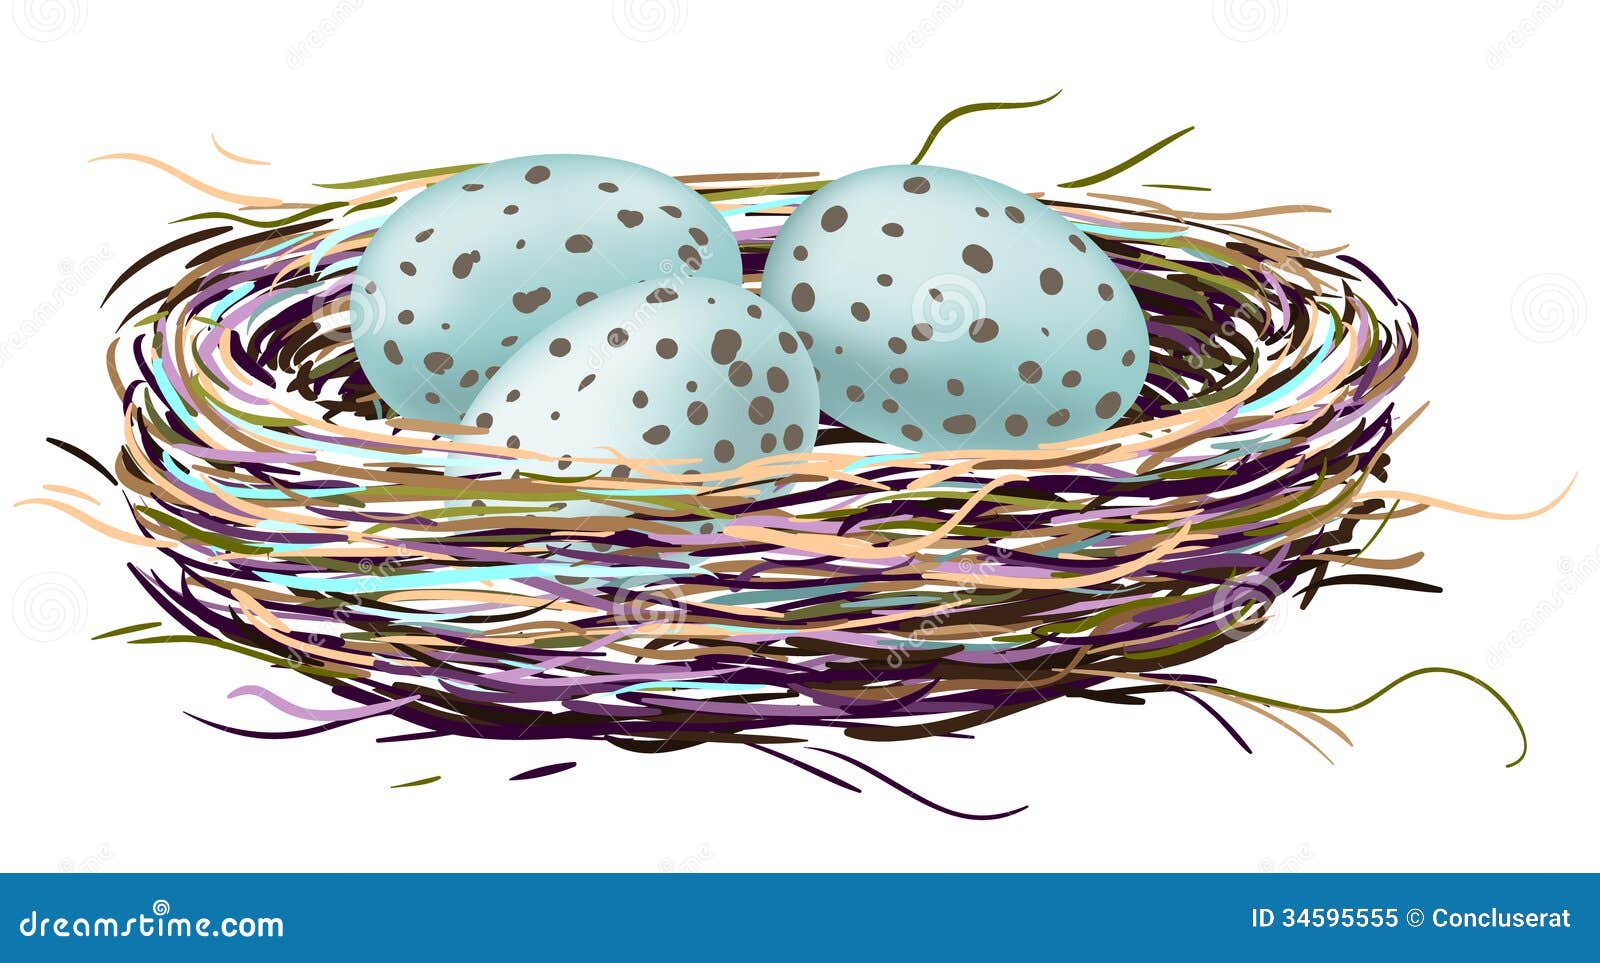 clipart nest egg - photo #37